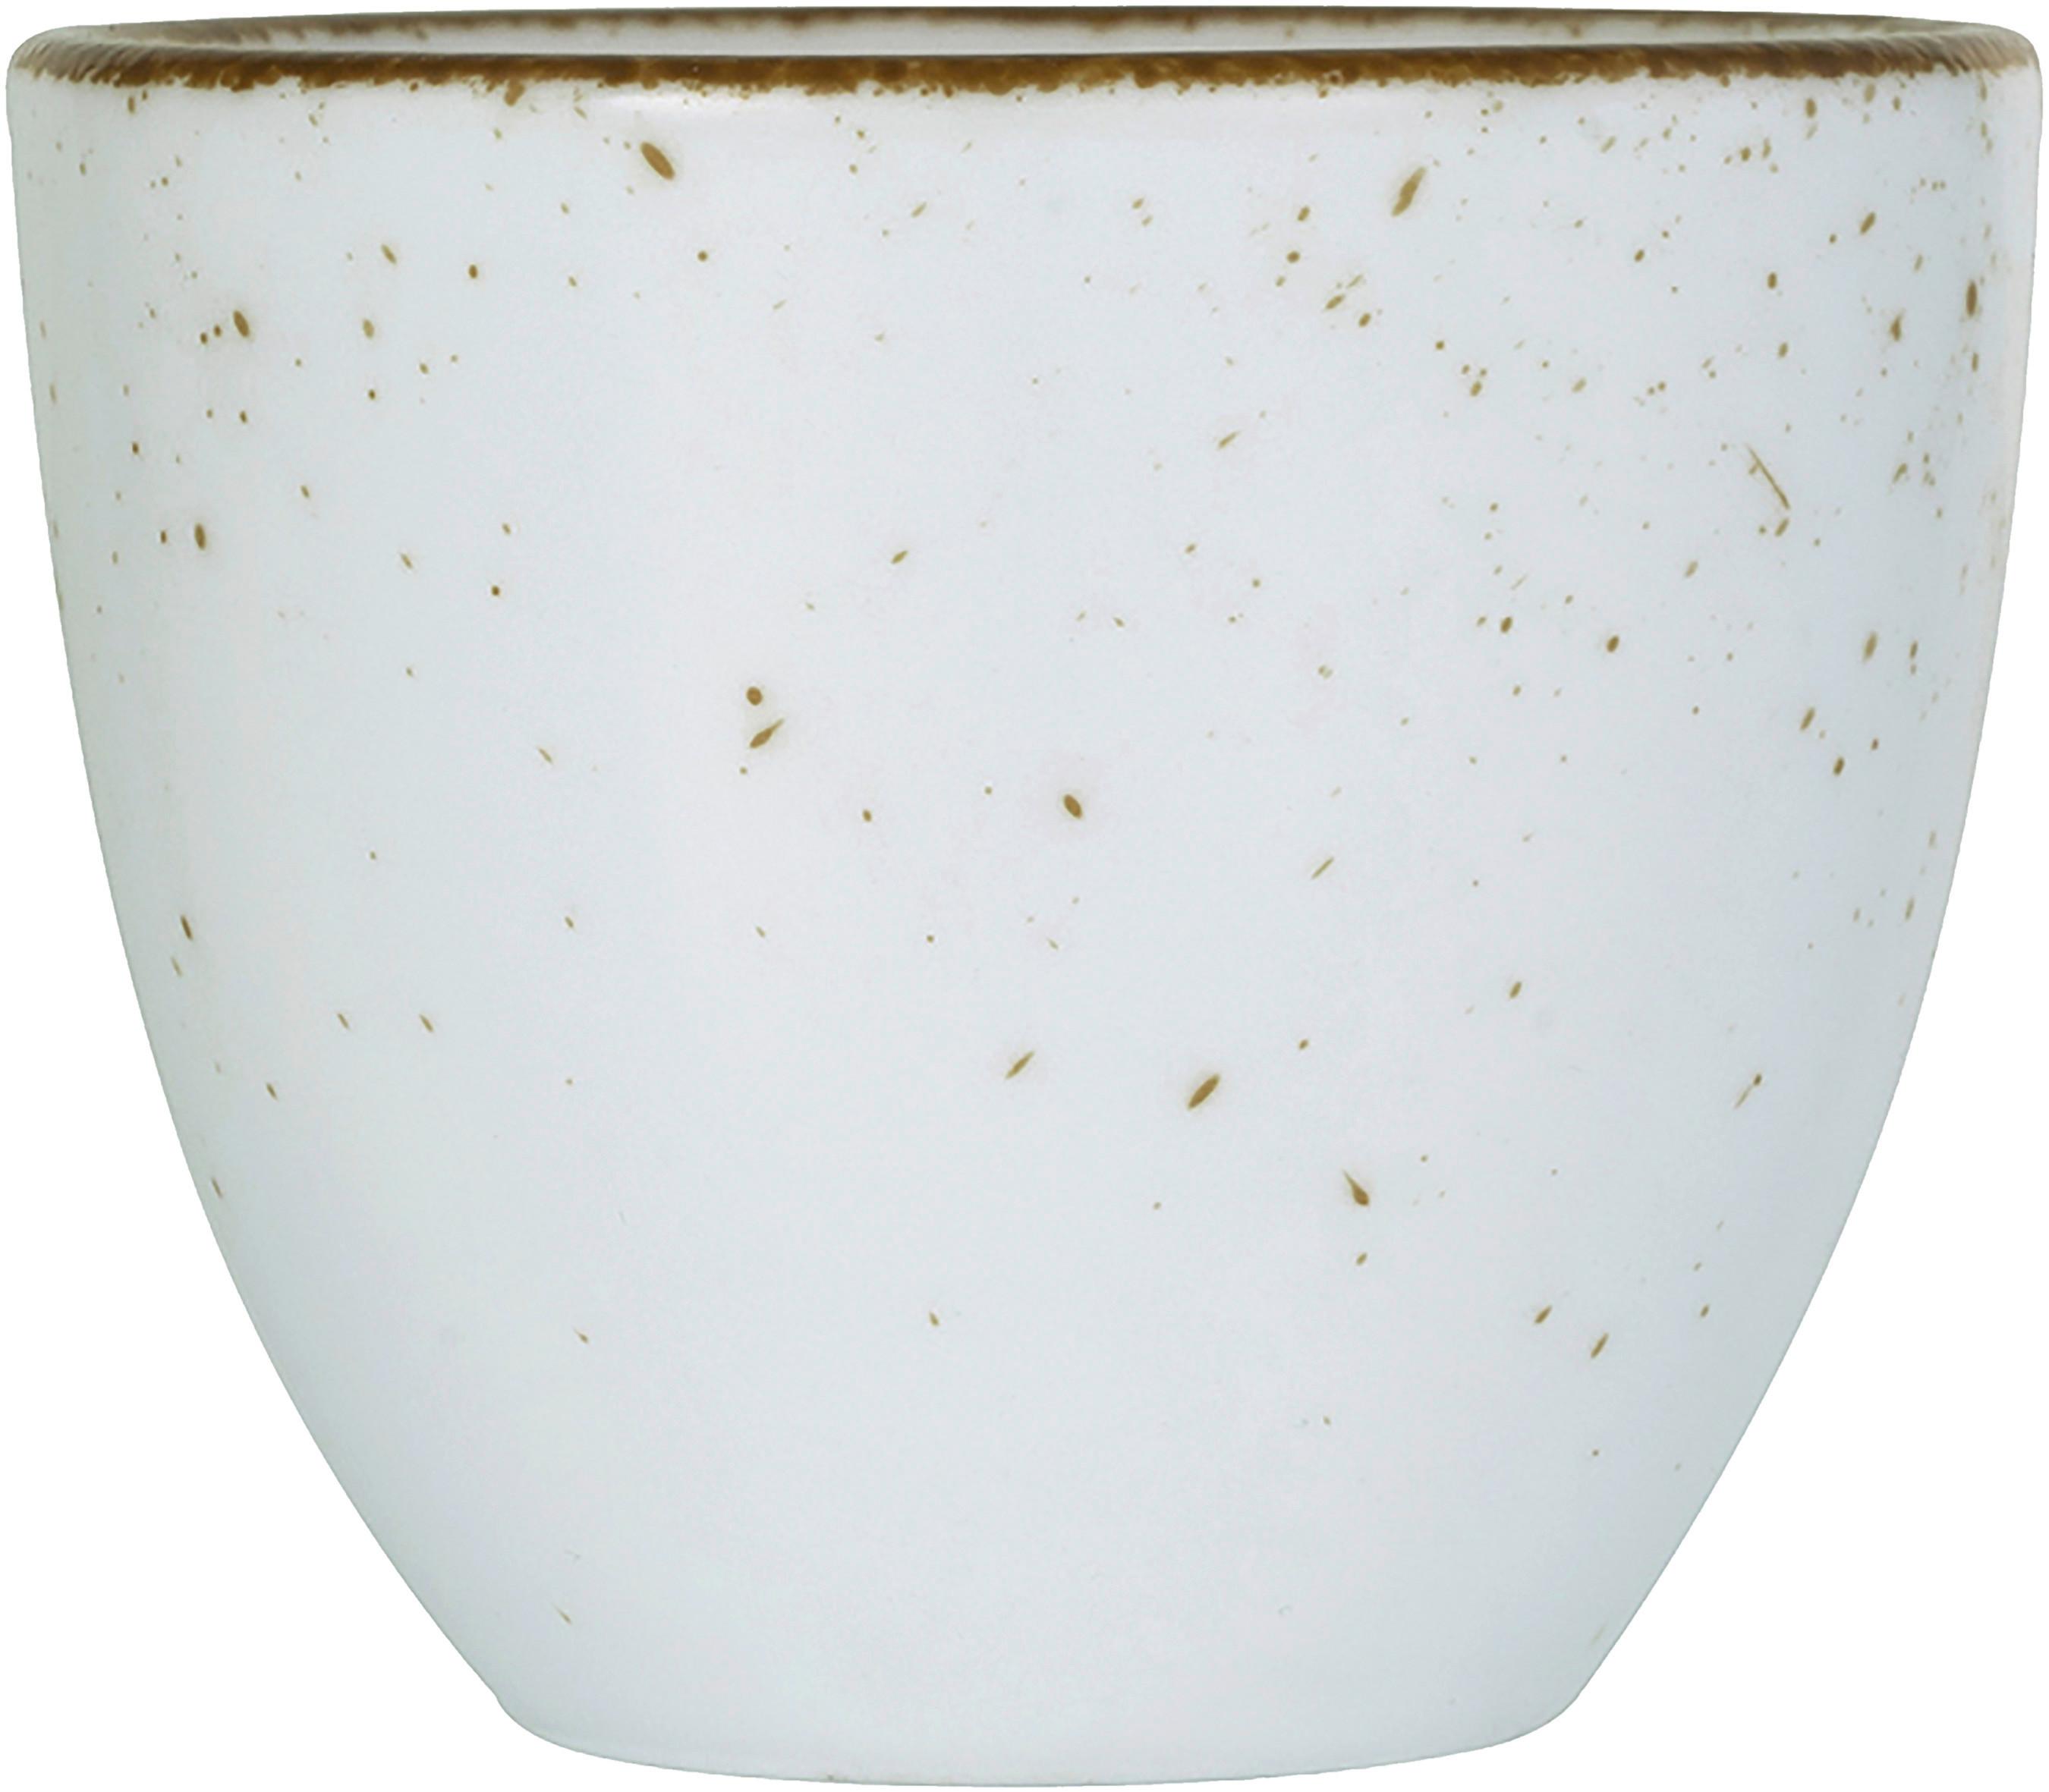 Espressotasse Capri aus Porzellan ca. 80ml - Weiß, MODERN, Keramik (6,5/6,5/6cm) - Premium Living